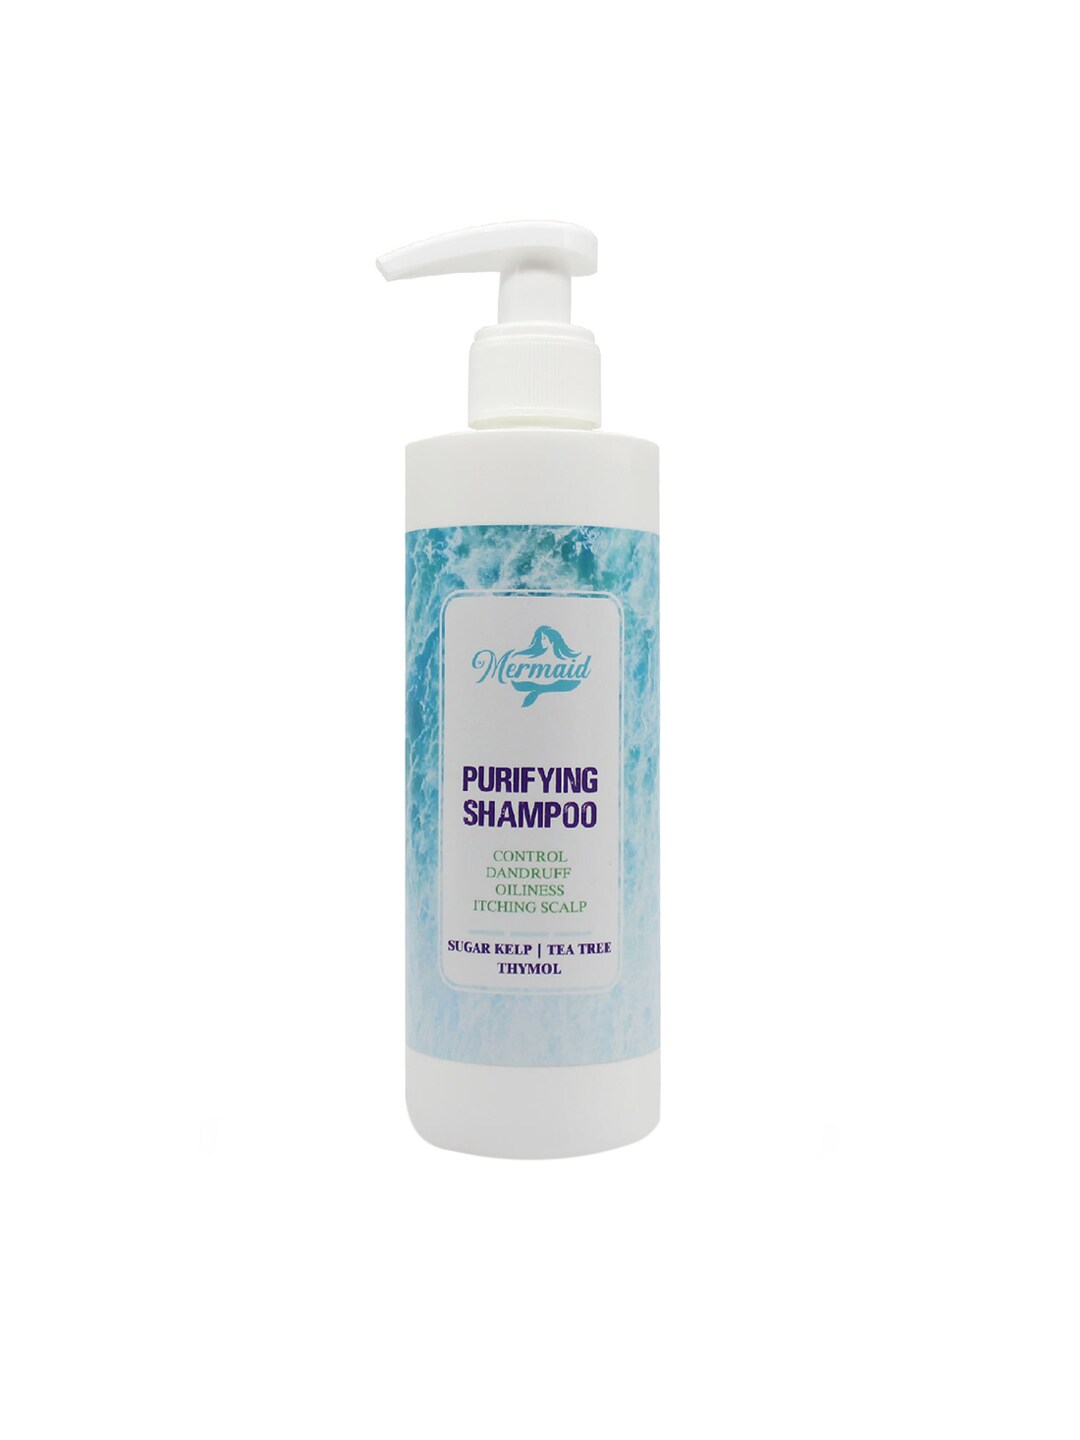 Mermaid Purifying Shampoo 250ml Price in India